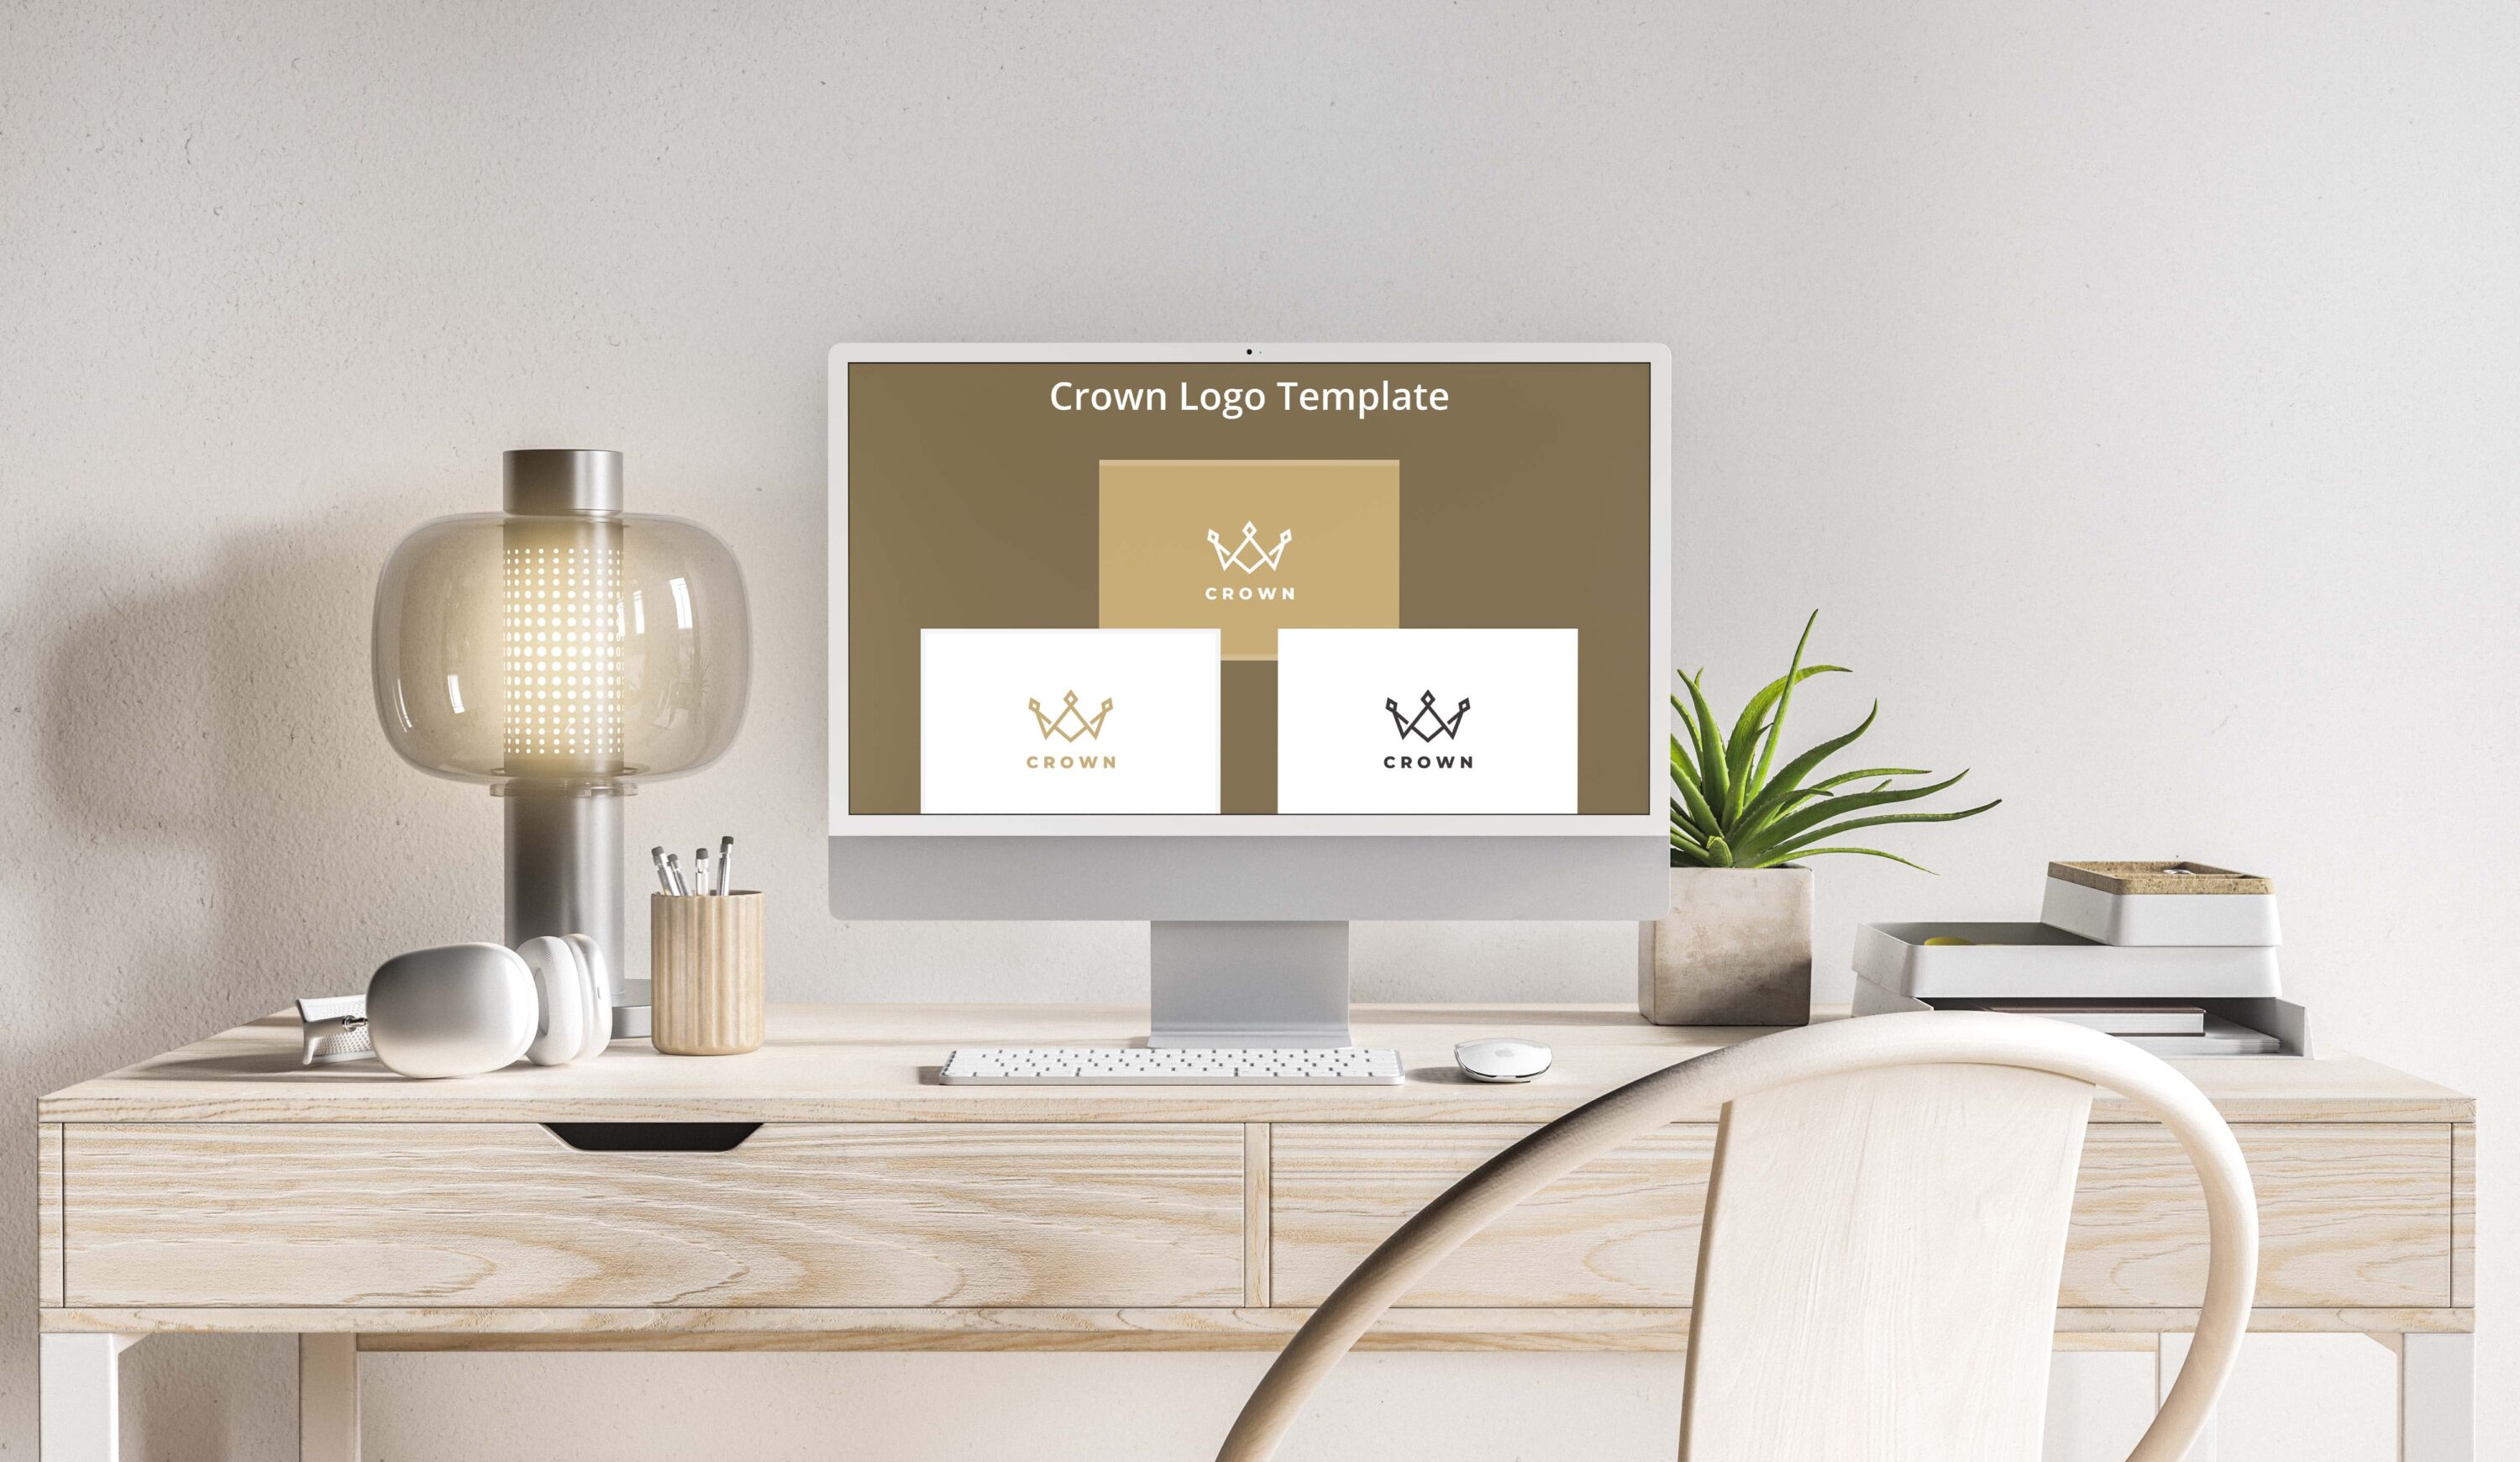 Crown Logo Template - desktop.